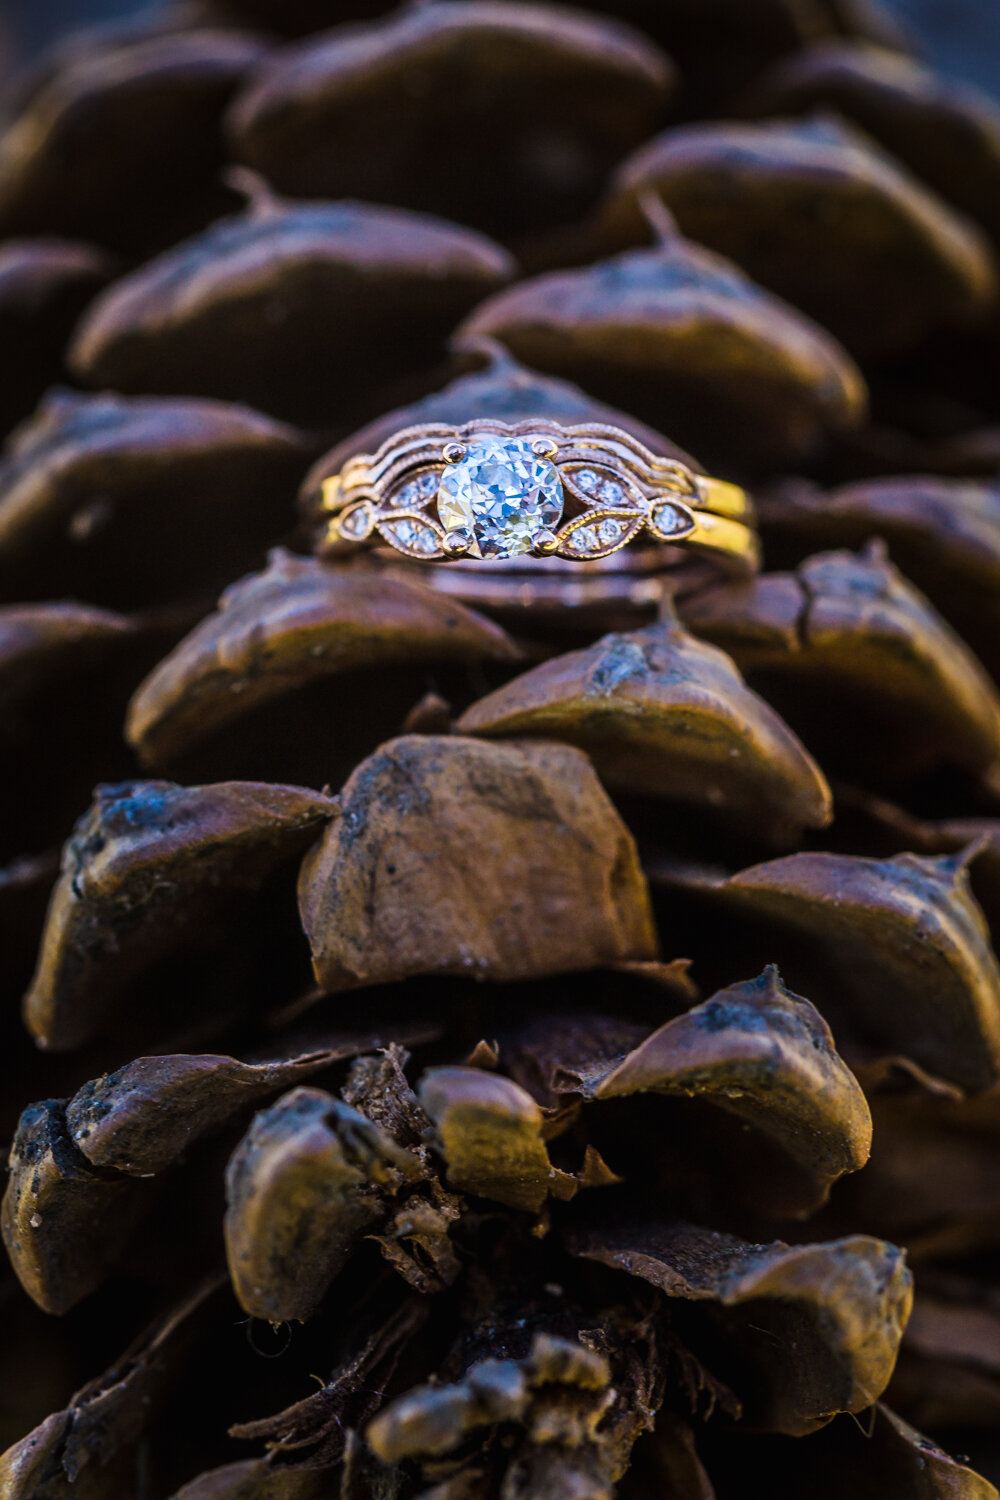  Wedding ring details by JMGant Photography 